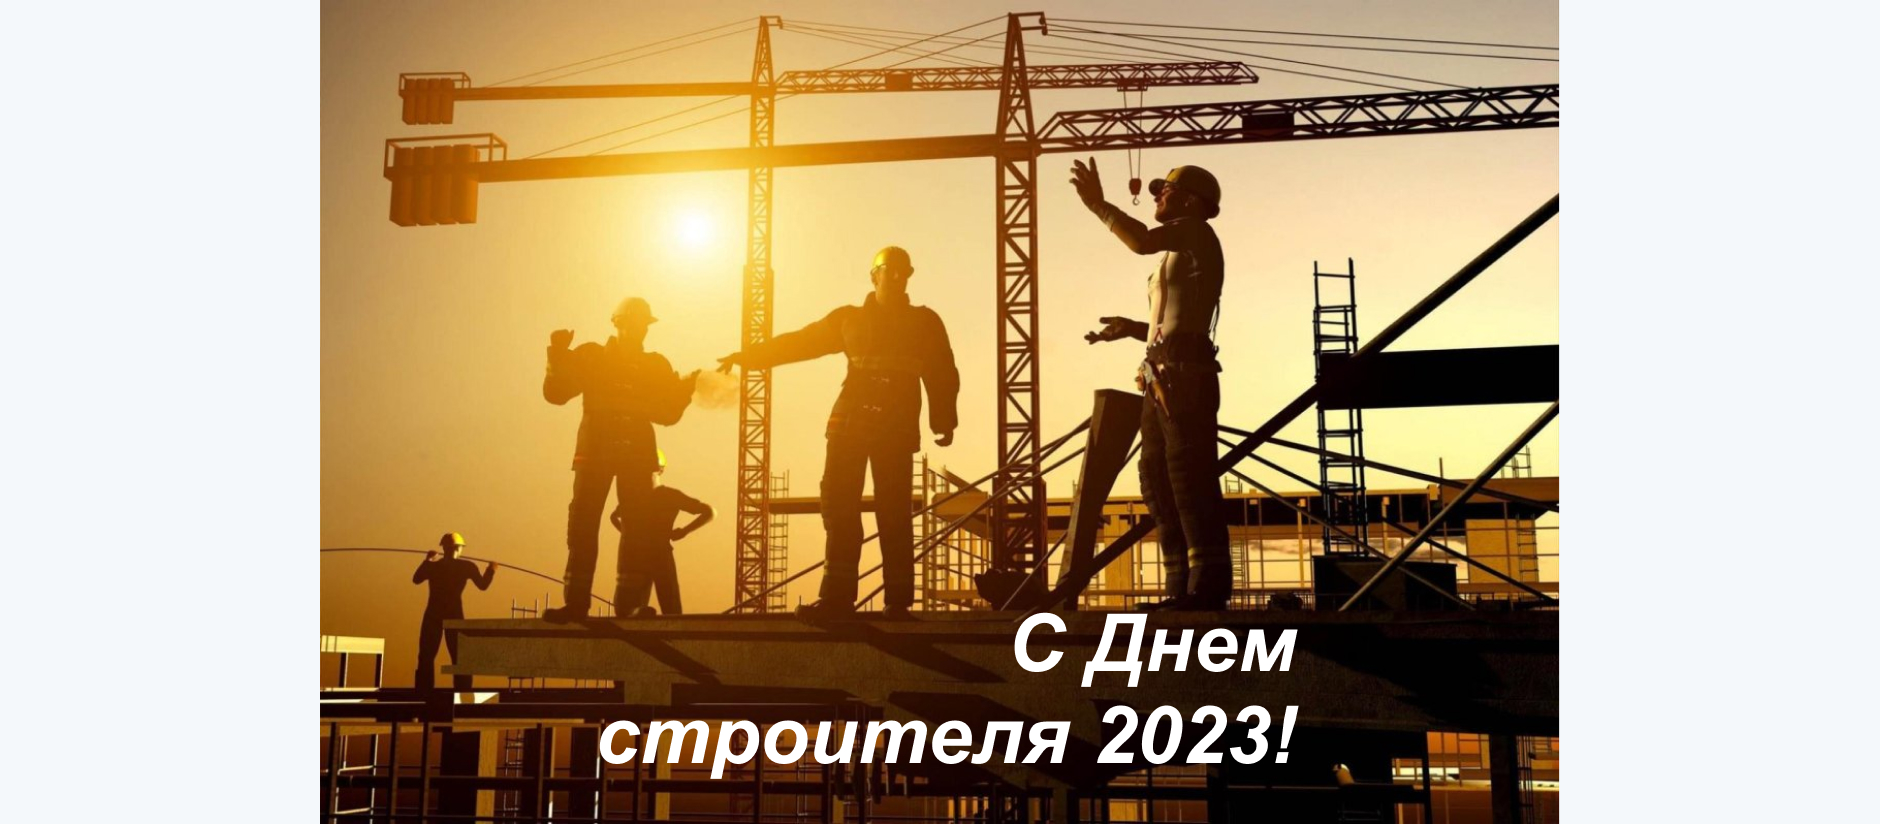 Happy Builder's Day 2023!